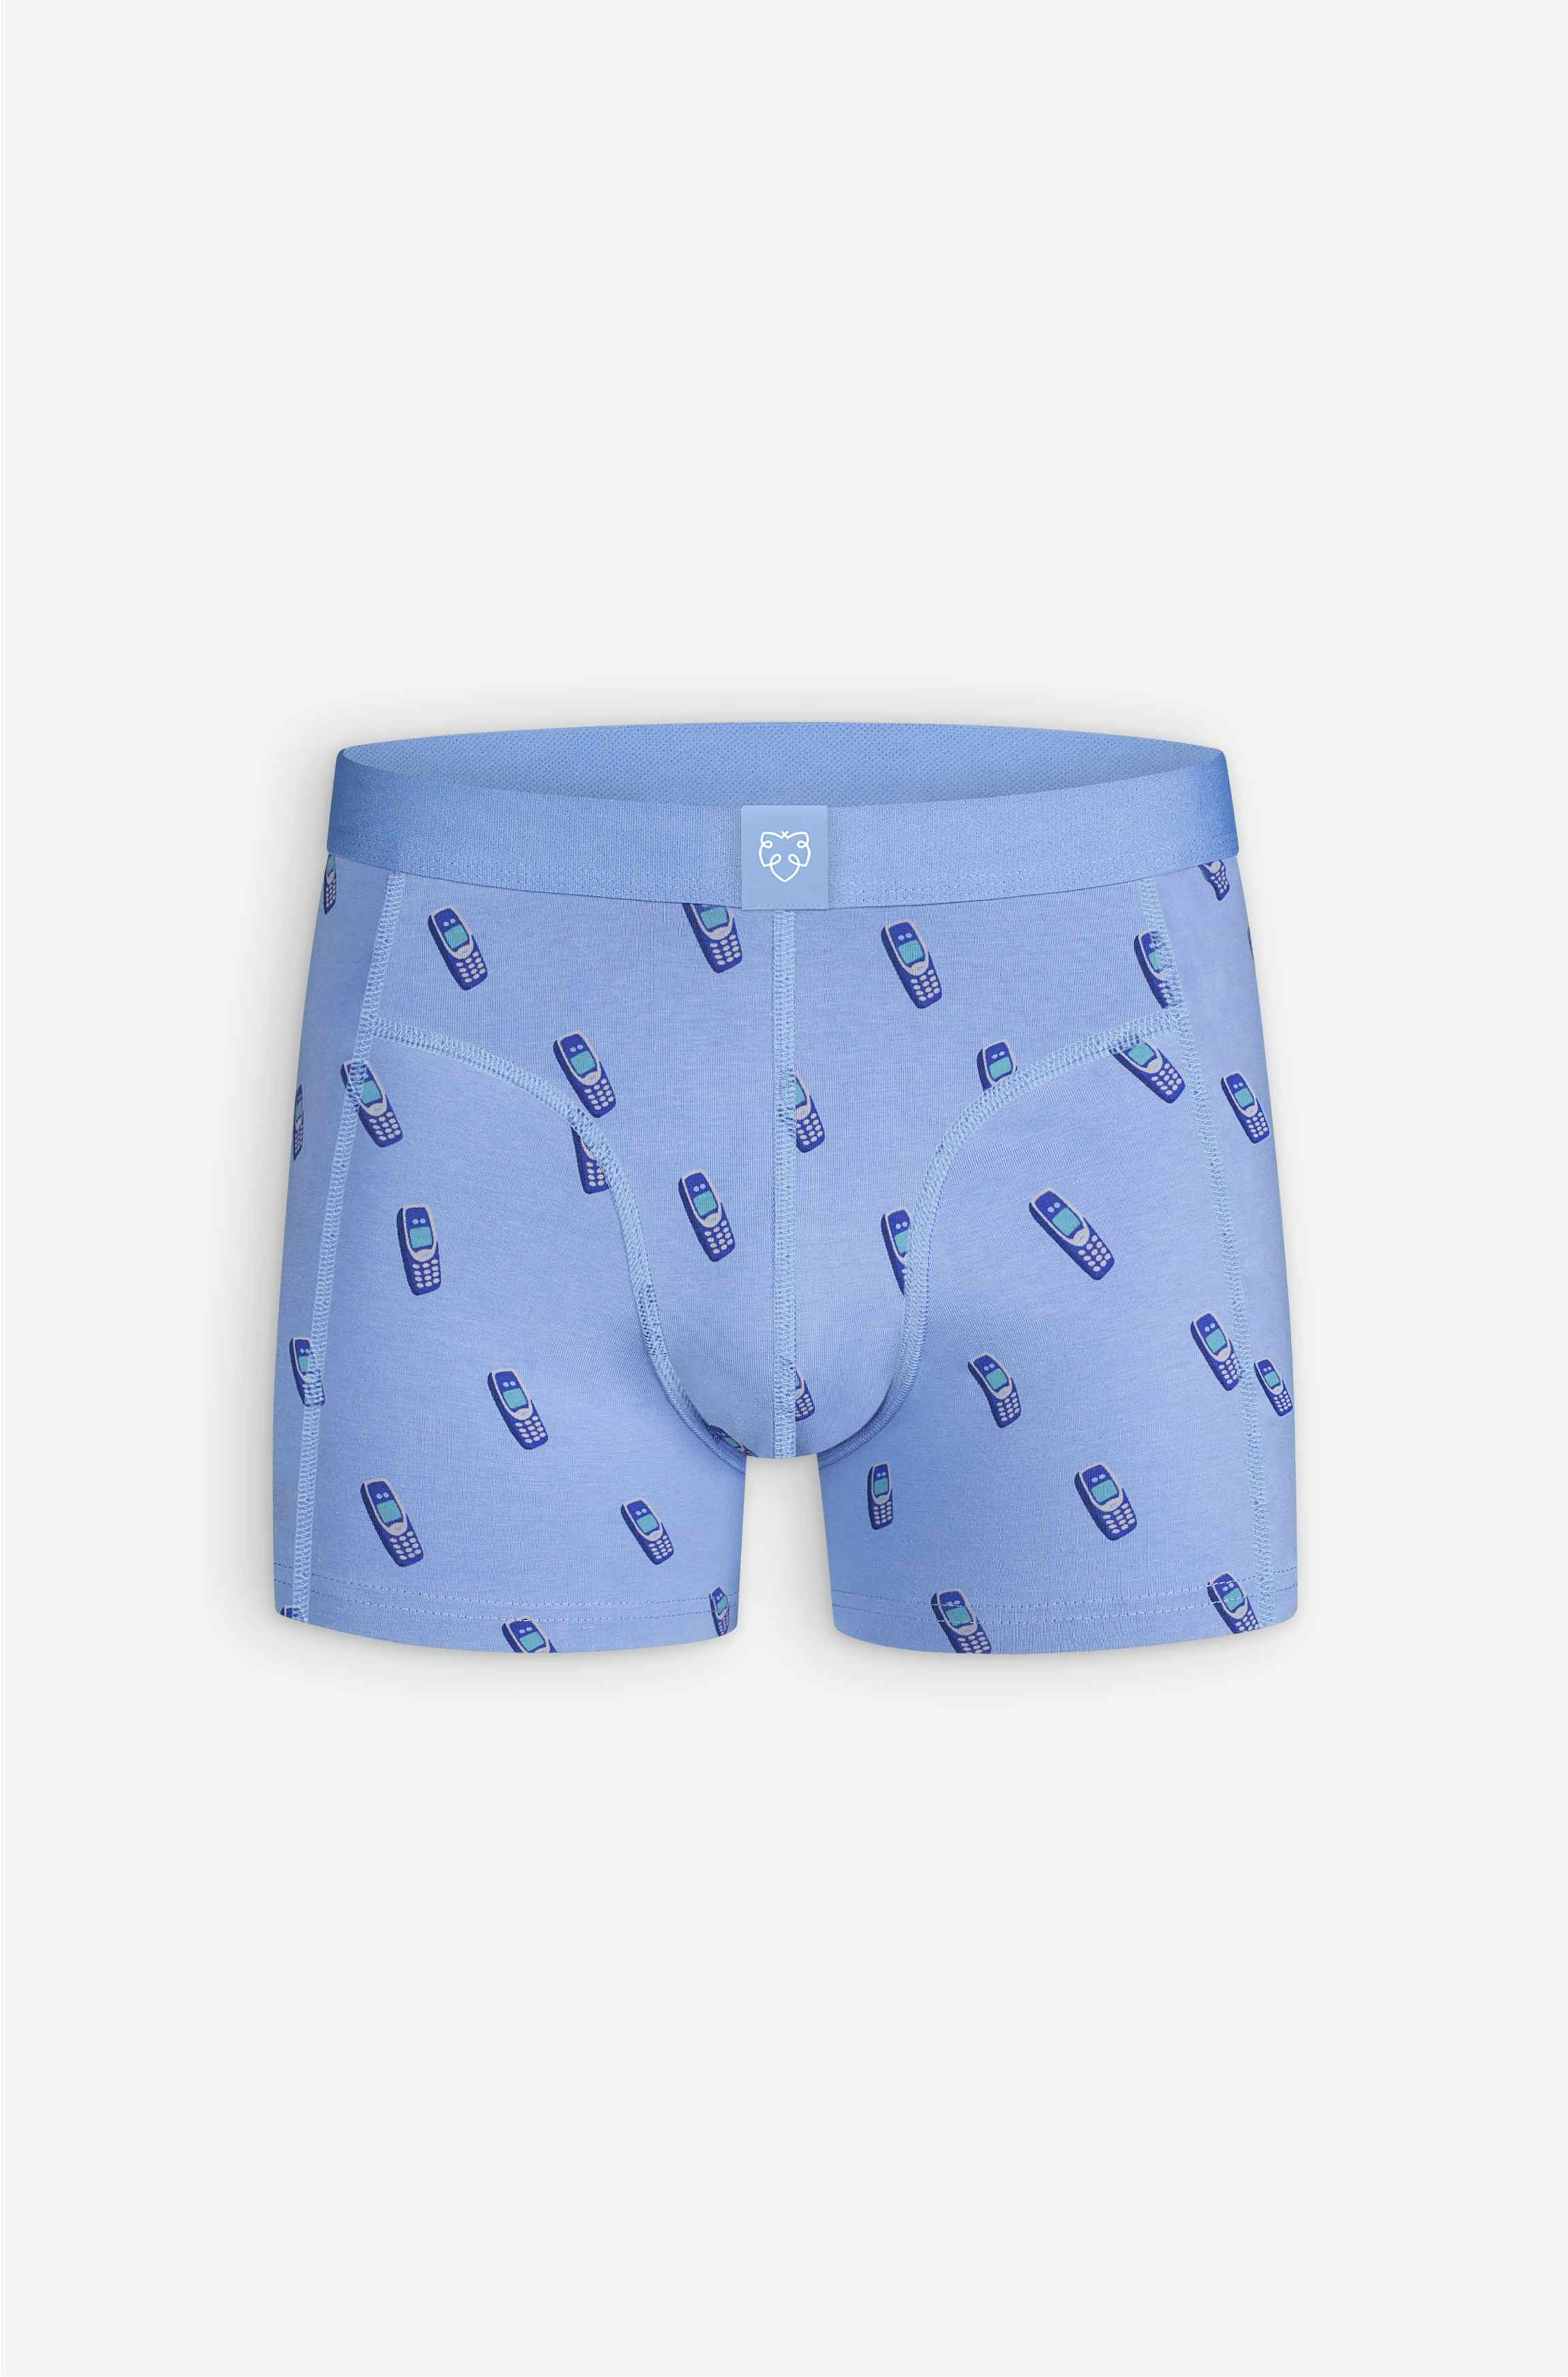 Login A Dam Underwear - Awwwards